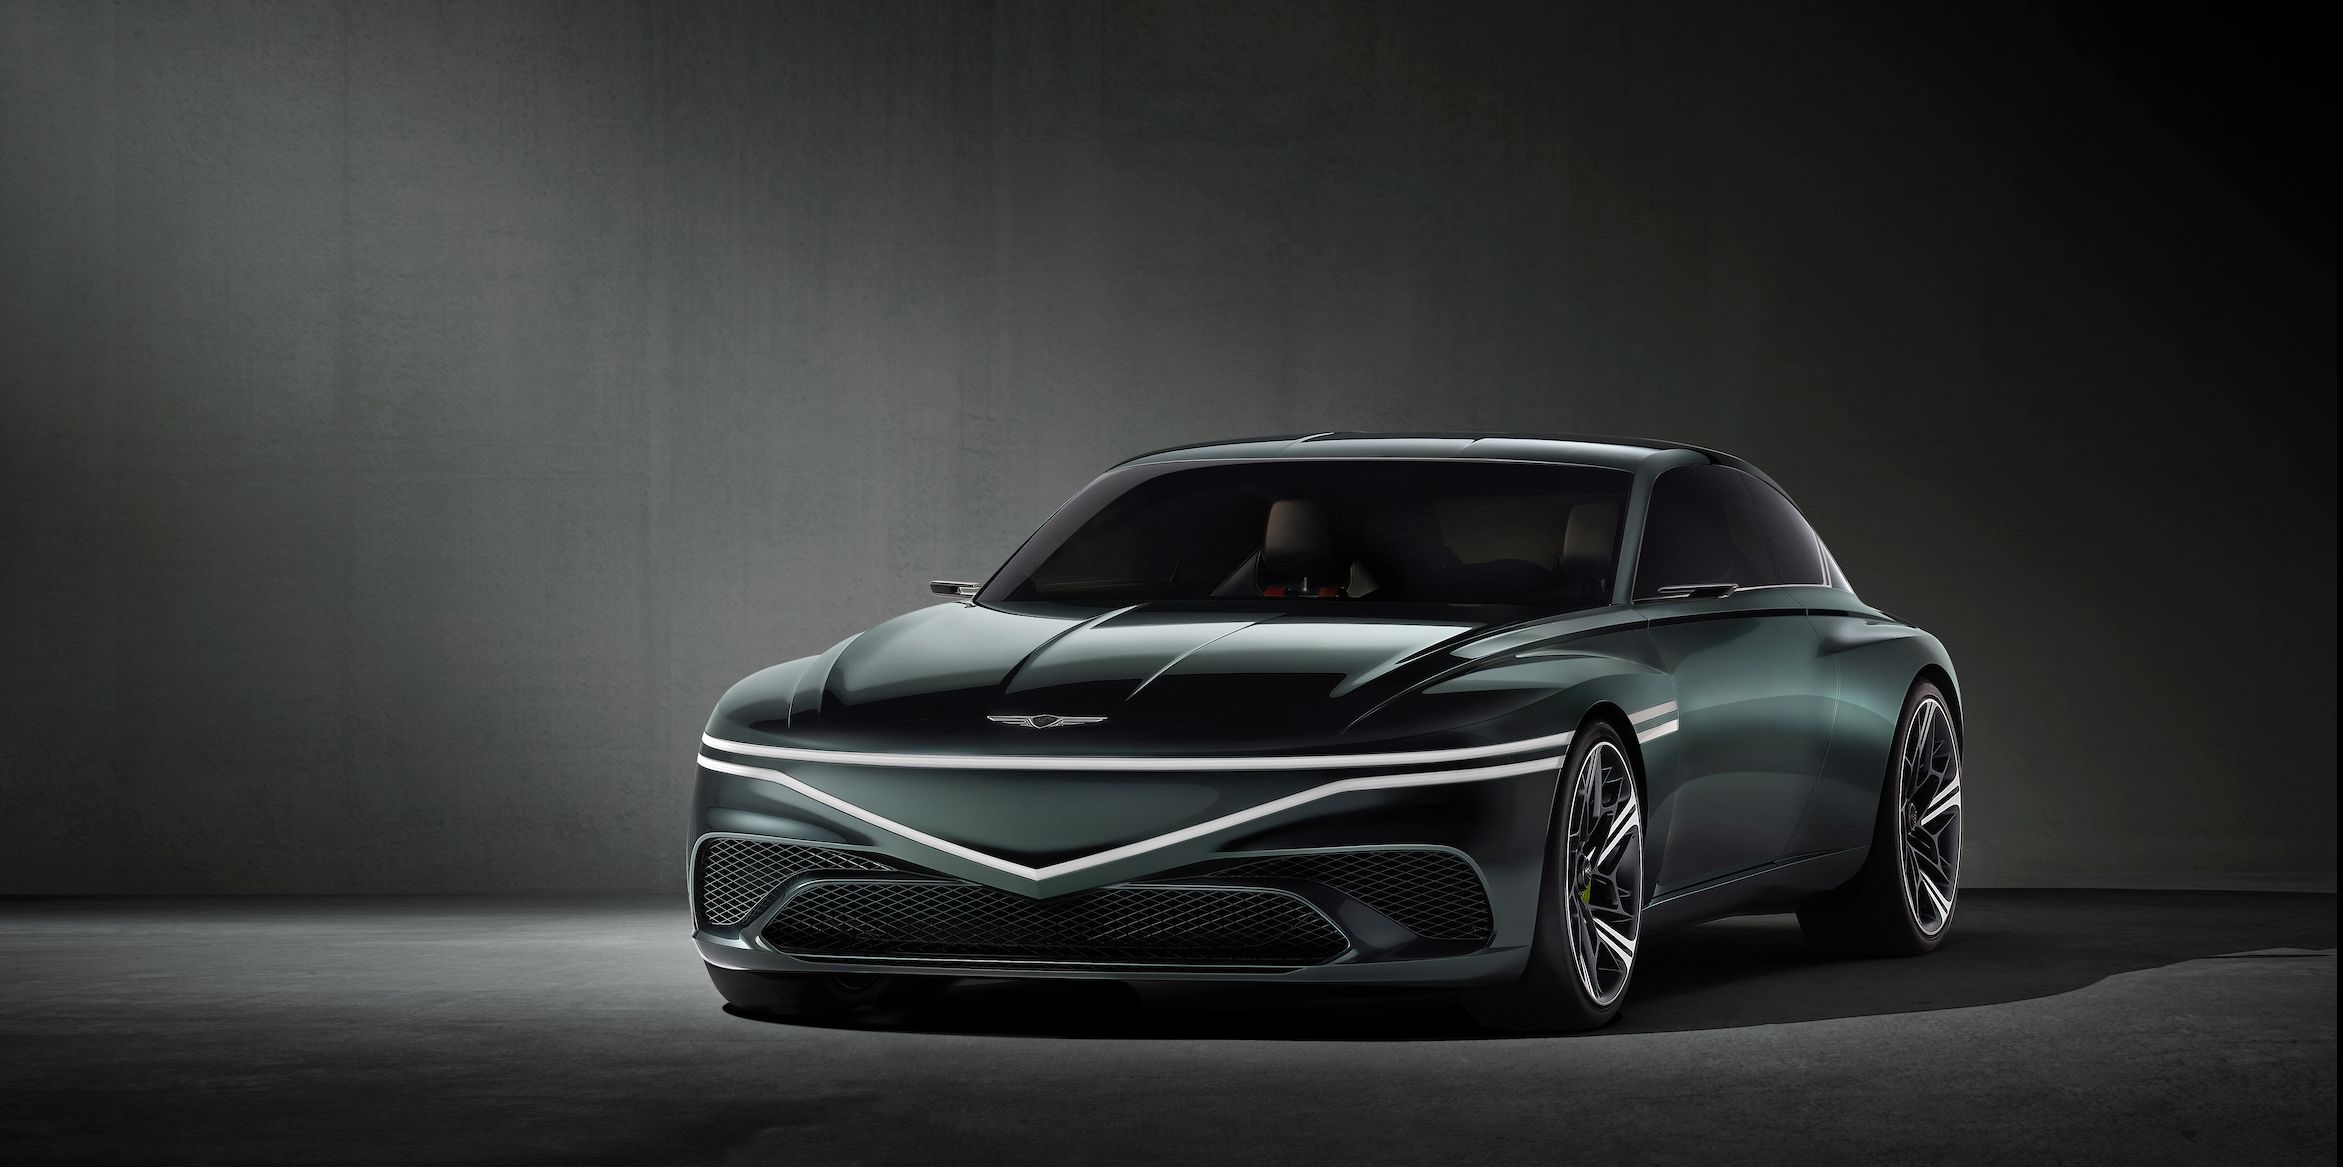 The Genesis X Speedium Coupe Is a Stunning Hatchback EV Concept